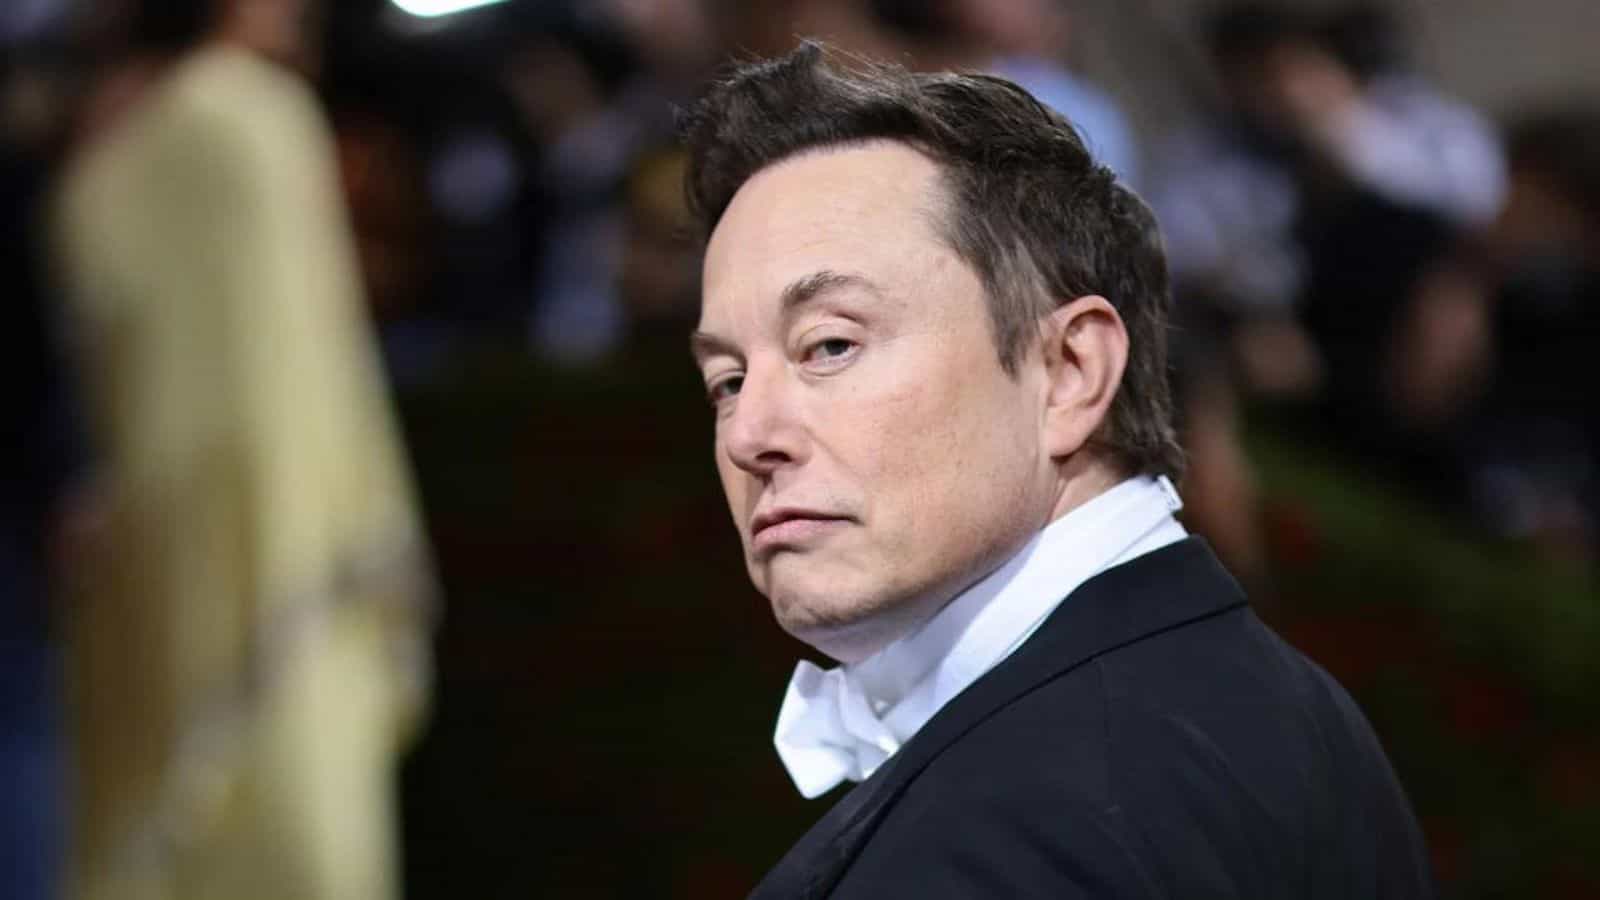 Elon Musk avvisa Apple: con ChatGPT nessun iPhone nelle mie aziende